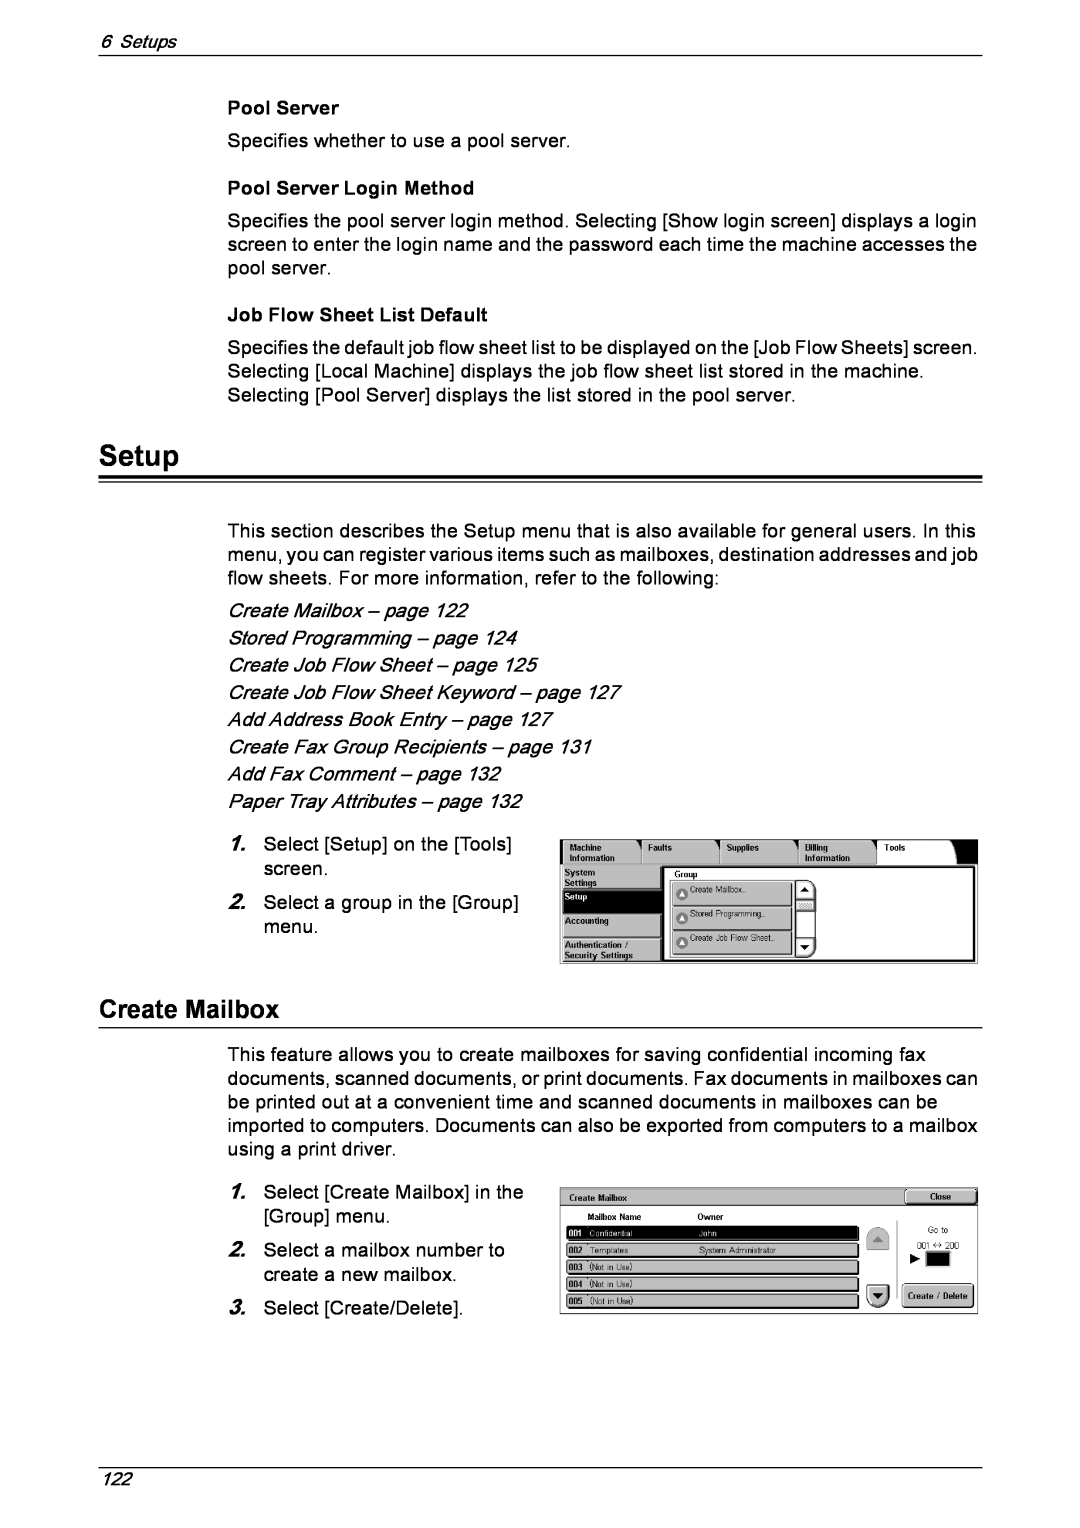 Xerox 5222 Setup, Create Mailbox, Pool Server Login Method, Job Flow Sheet List Default, Create Job Flow Sheet – page 